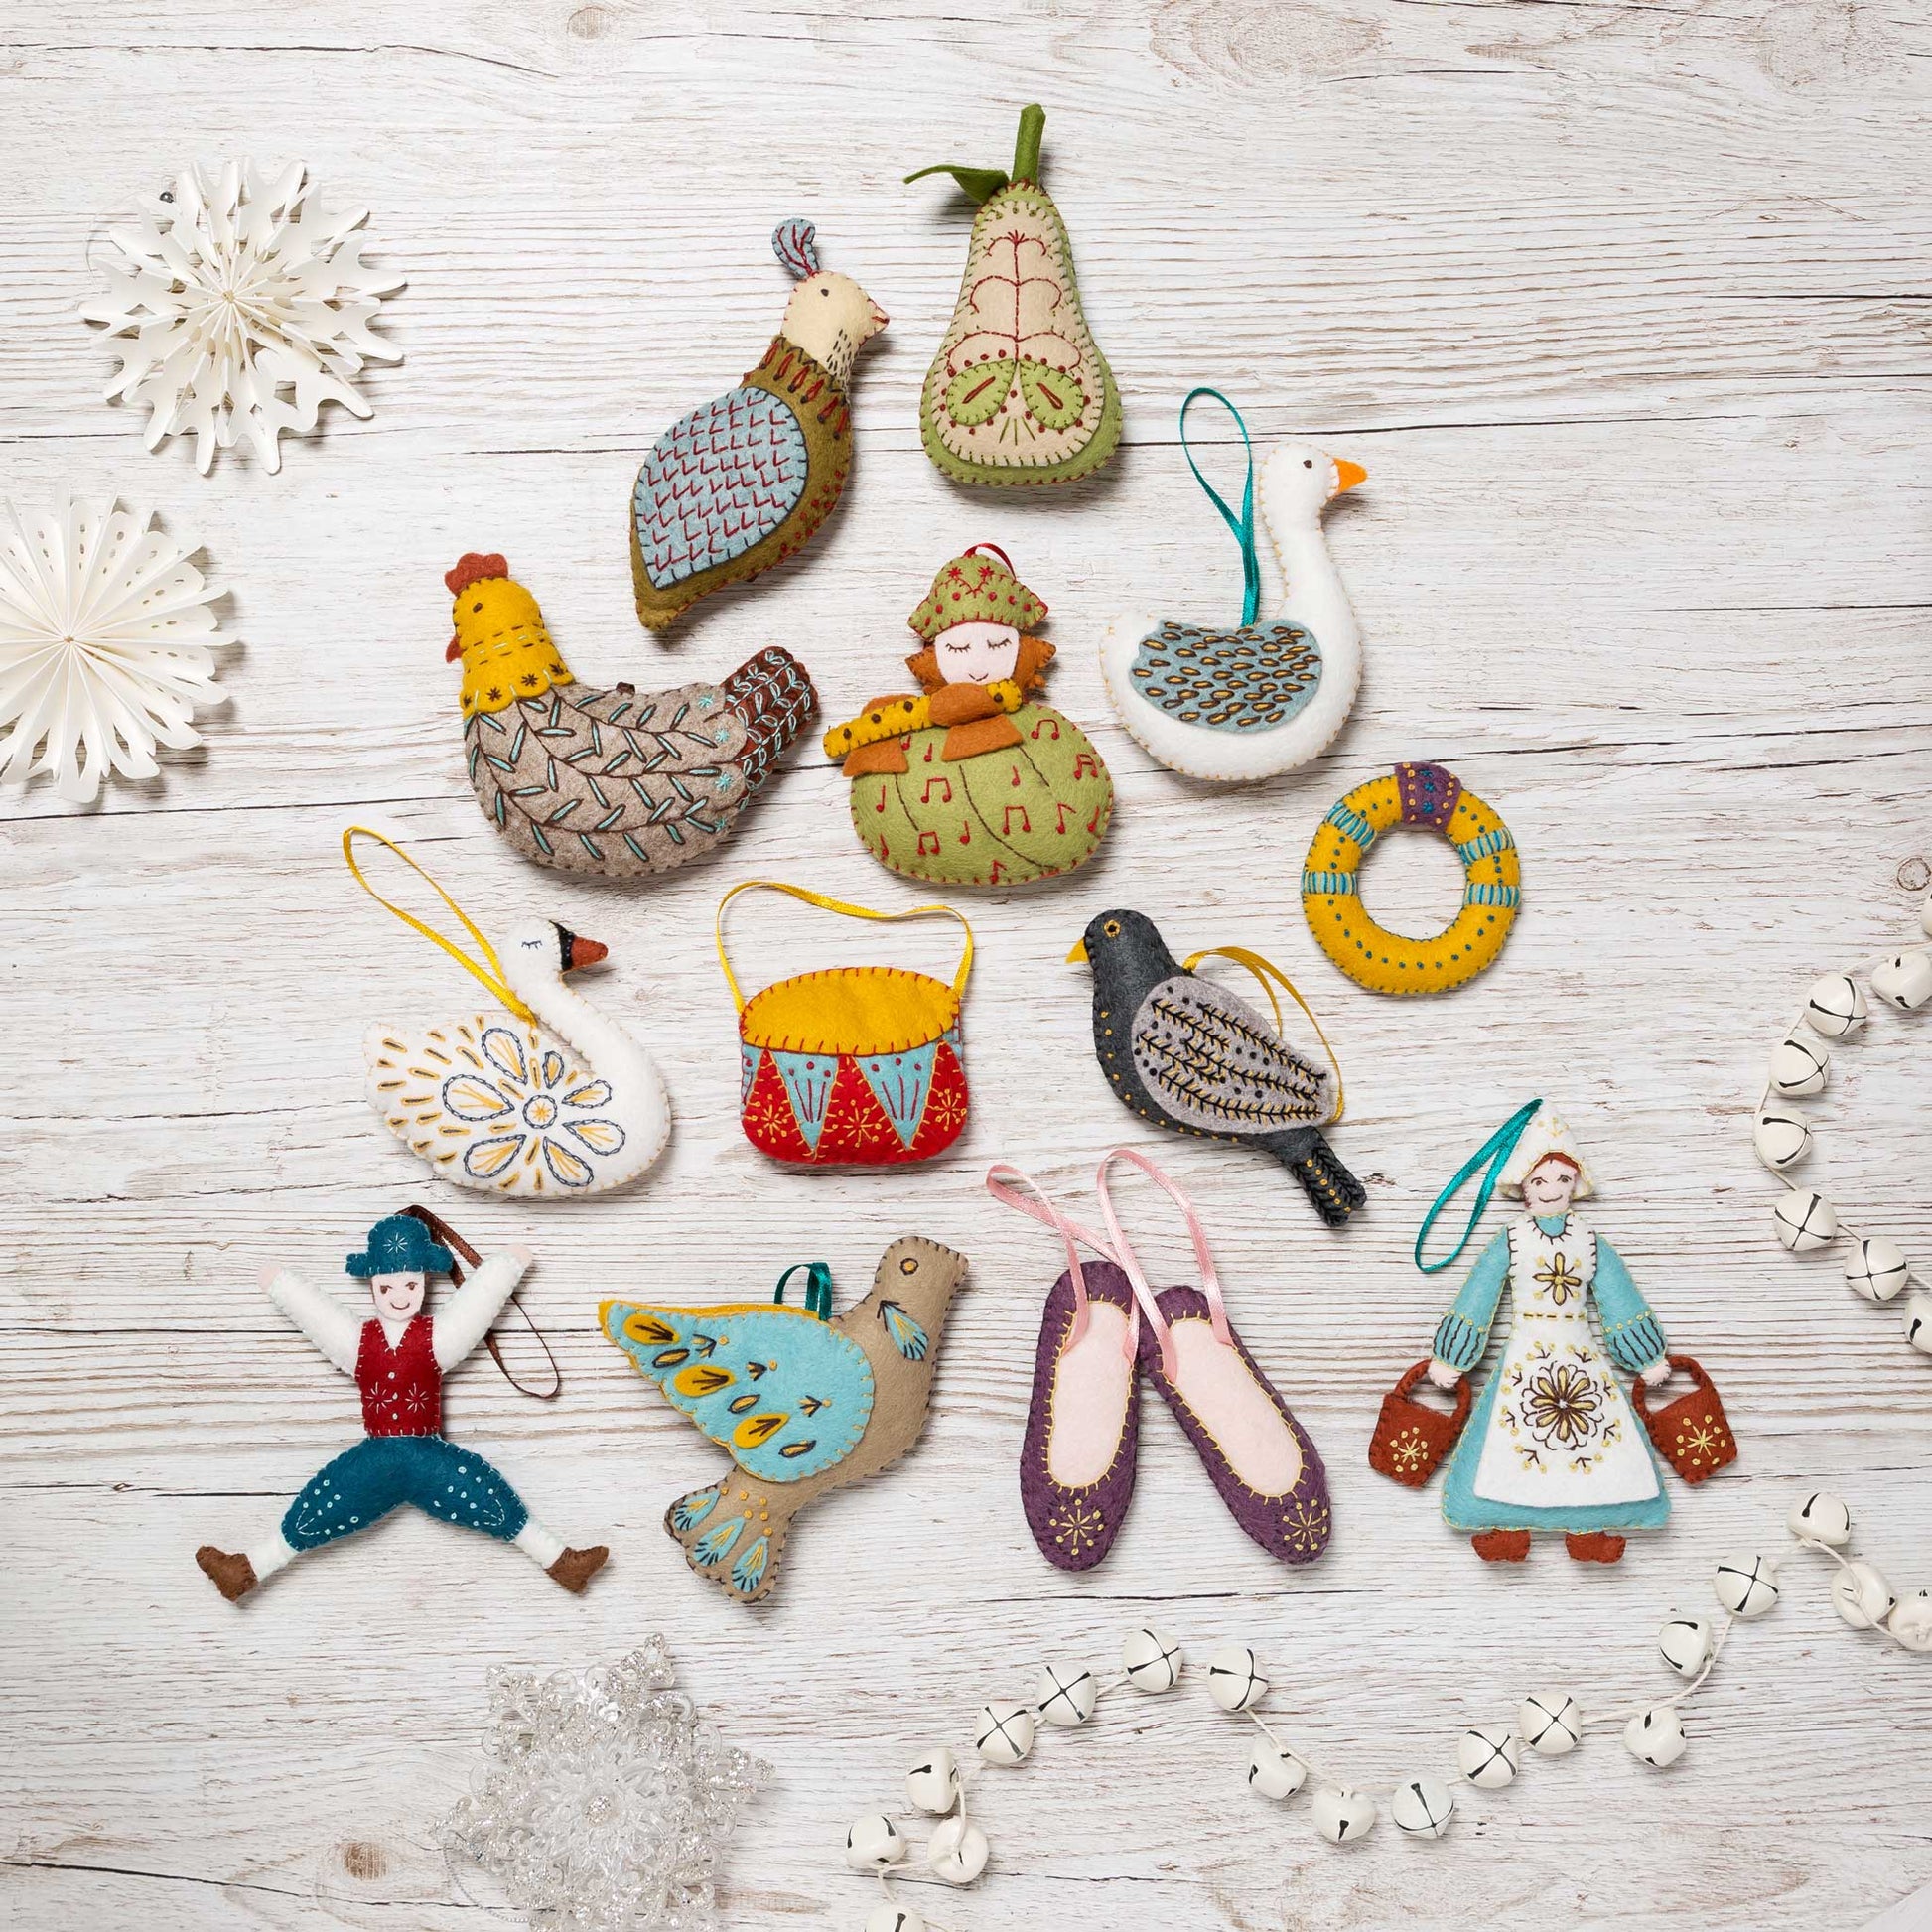 12 Days of Christmas Felt Ornament Craft Kit – Allport Editions